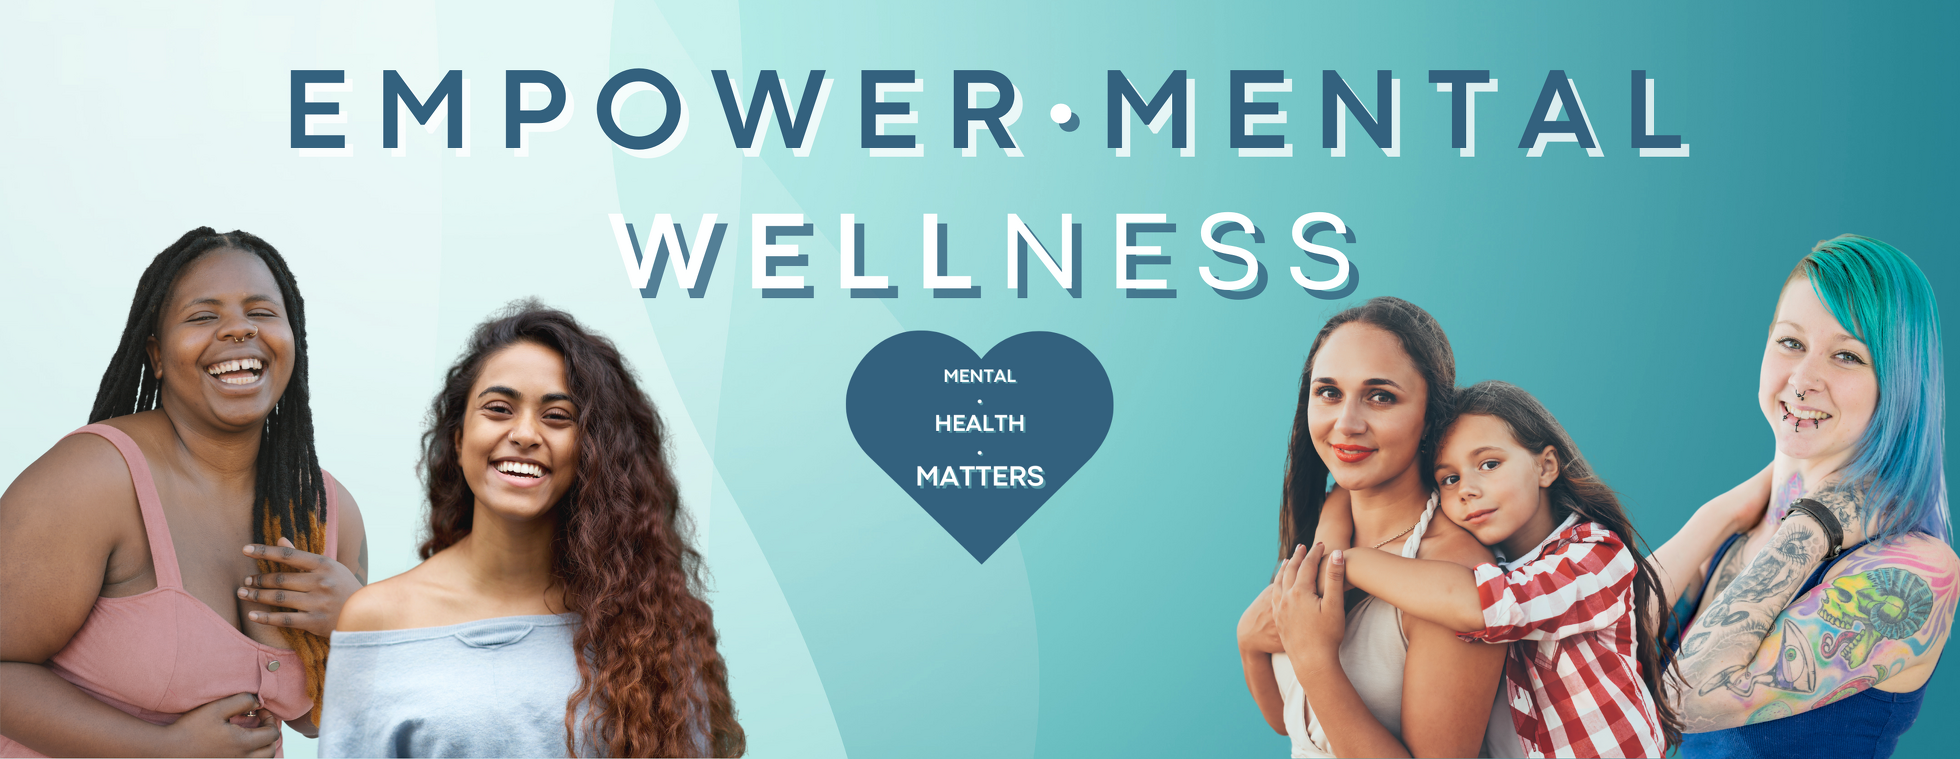 Empower · Mental Wellness: Mental Health Awareness Month Campaign